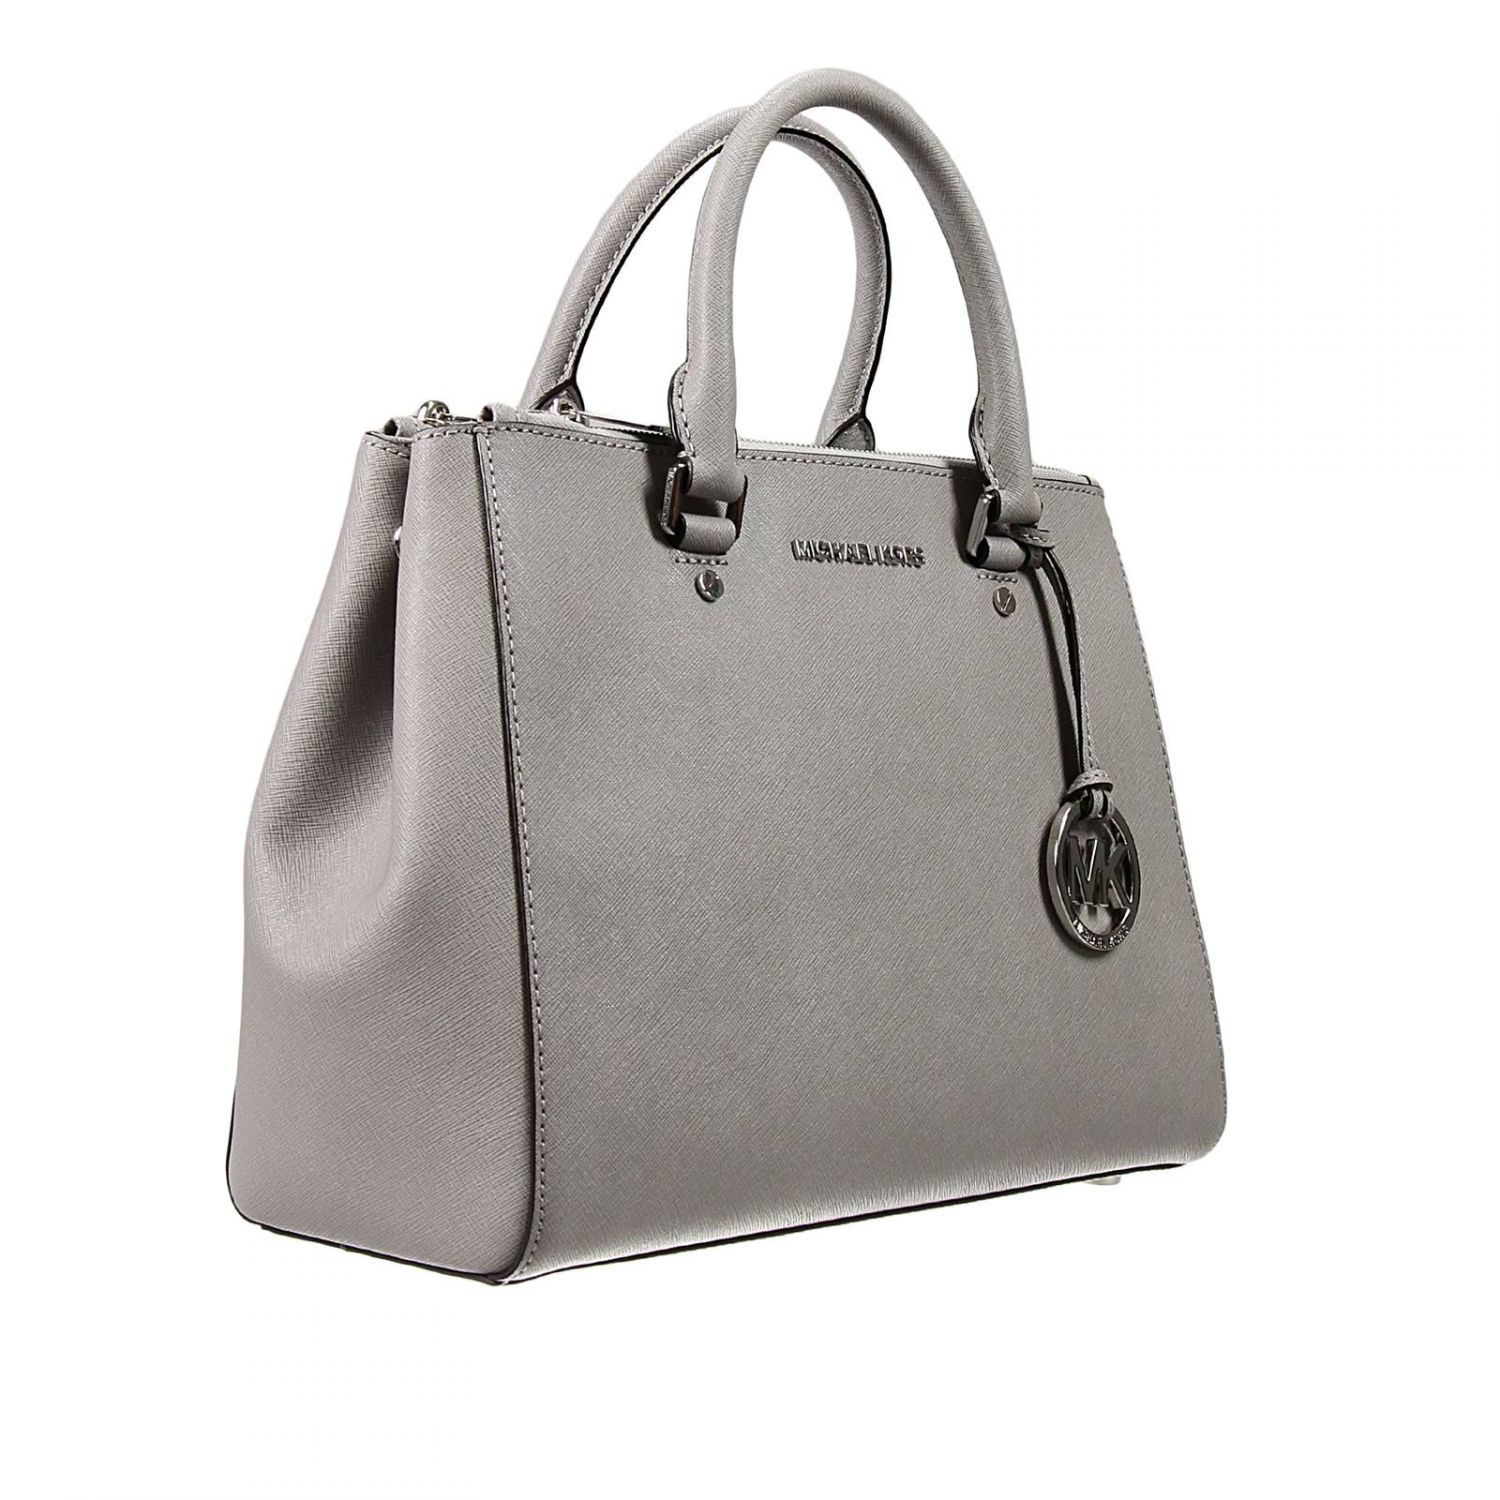 Lyst - Michael Kors Handbag Woman in Gray